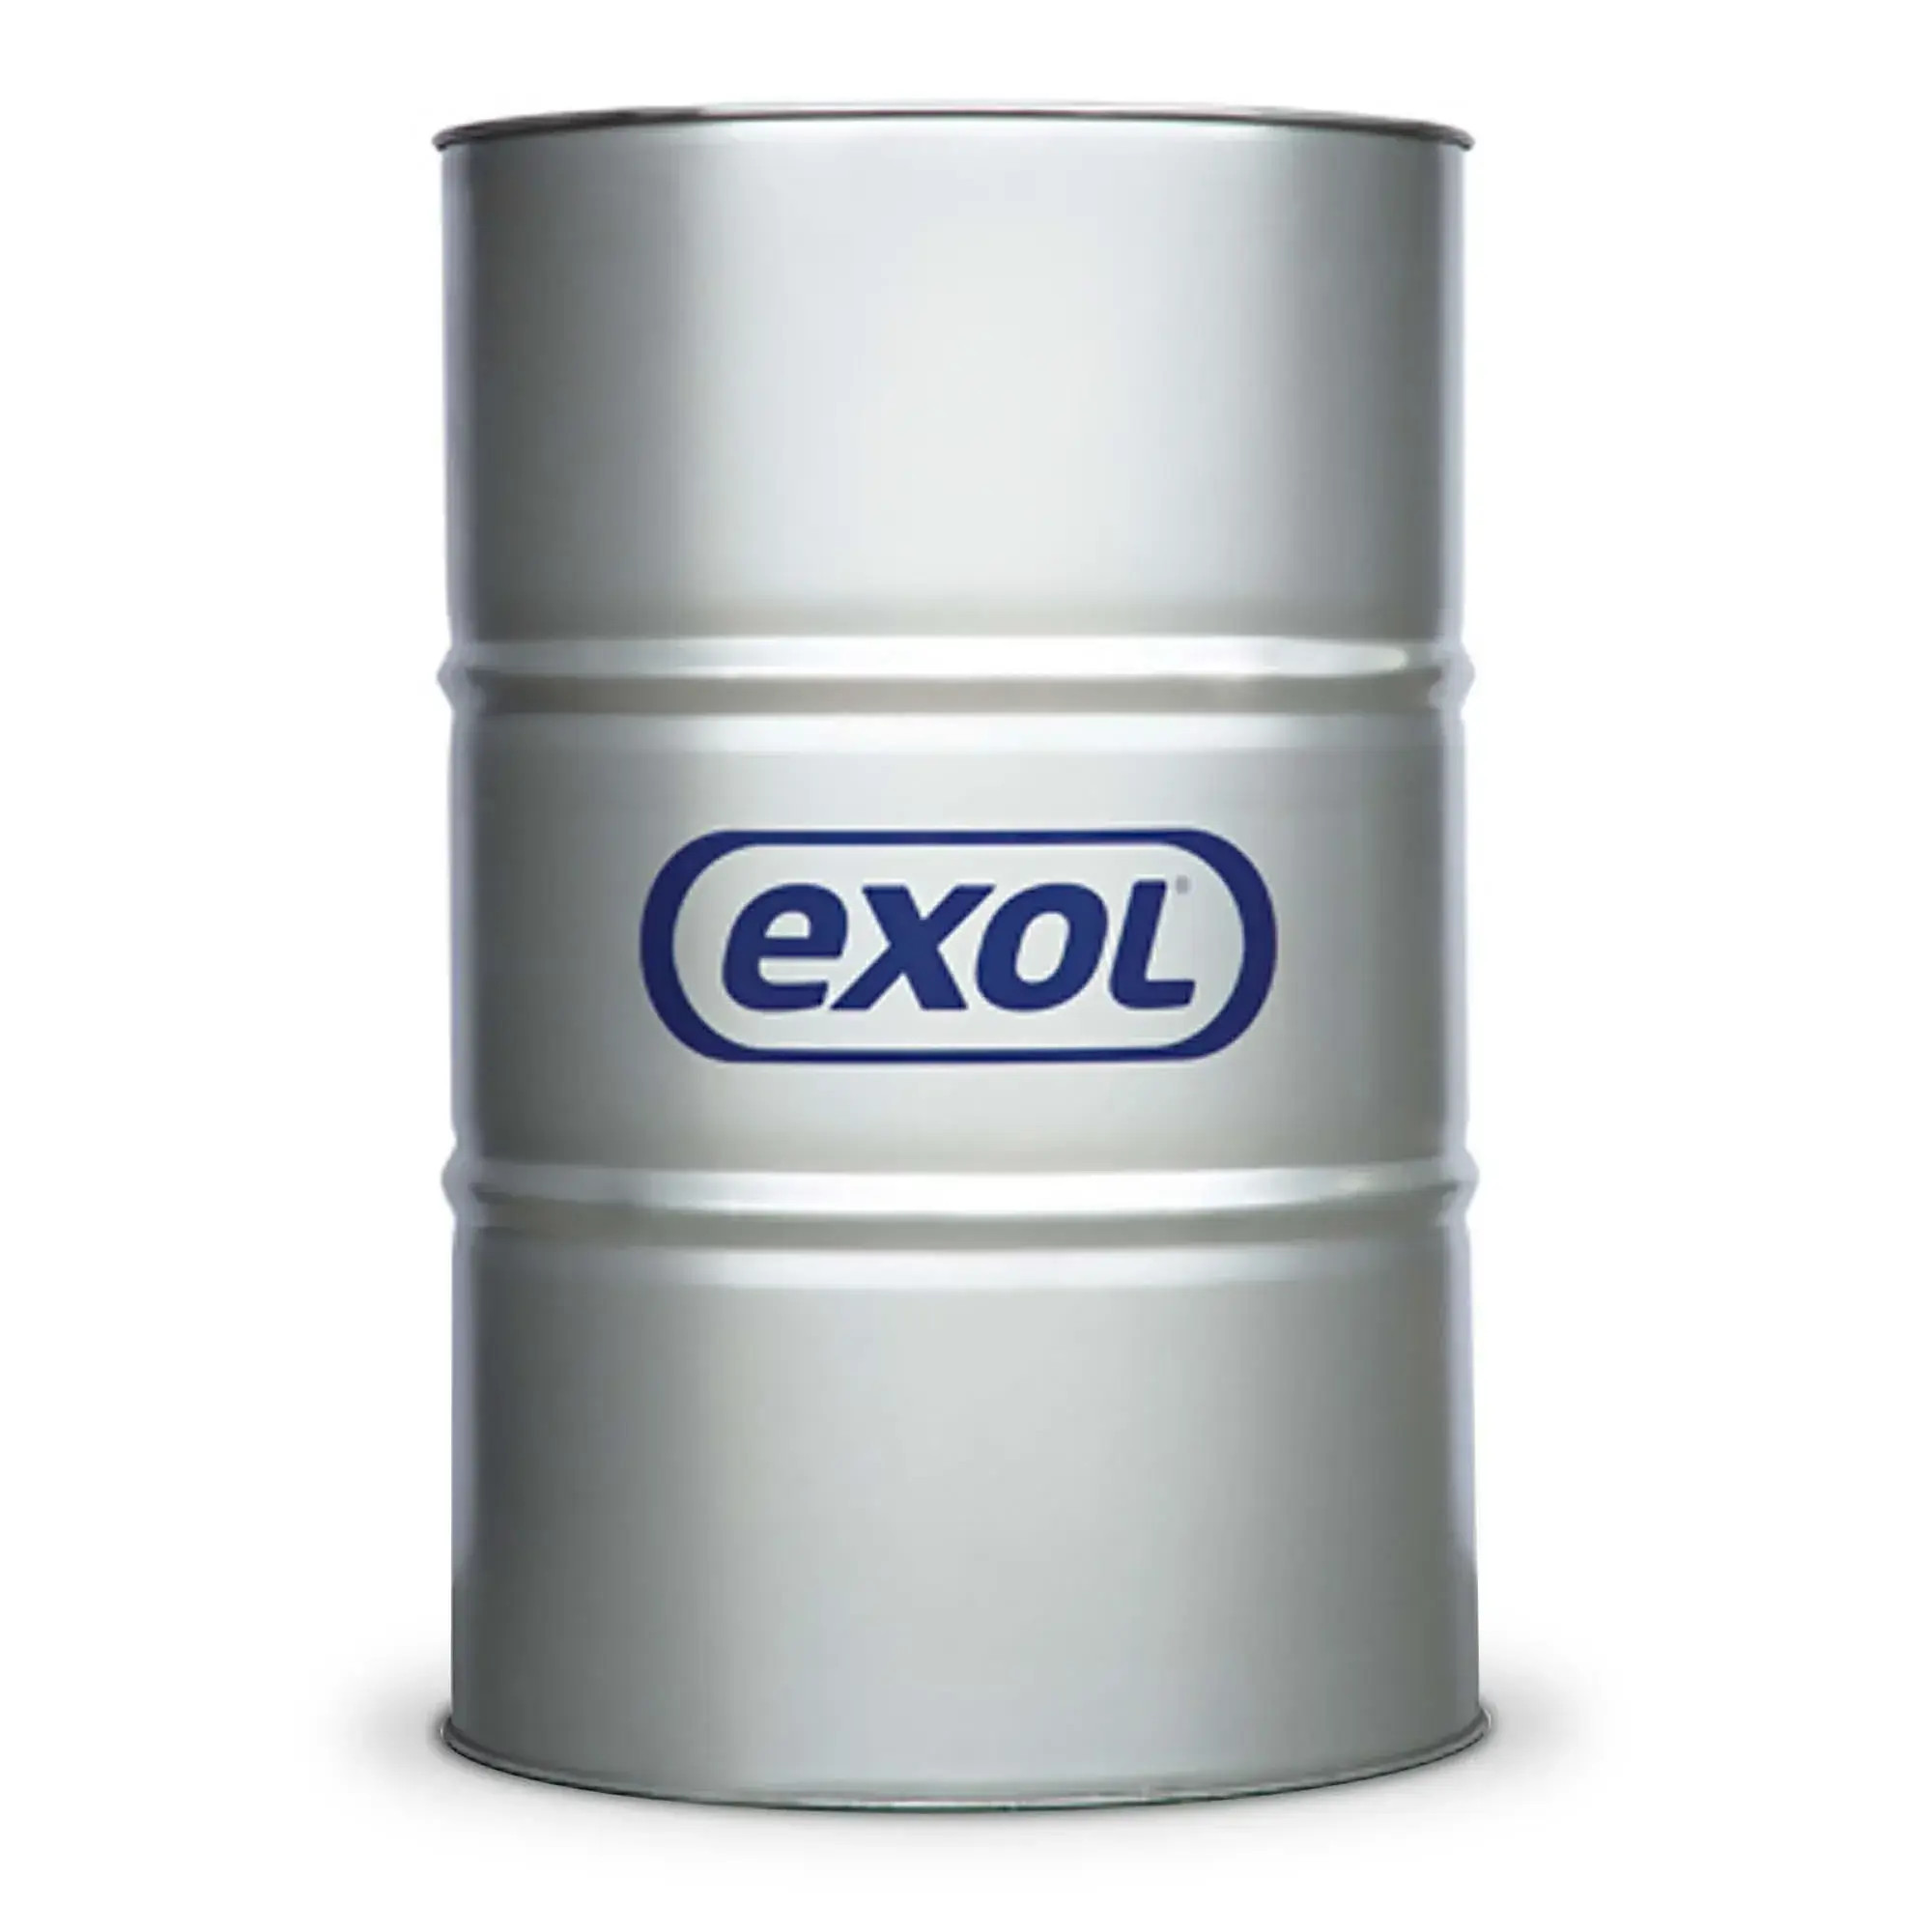 Exol Micron Paraffinic Mineral Oil GP220 205L